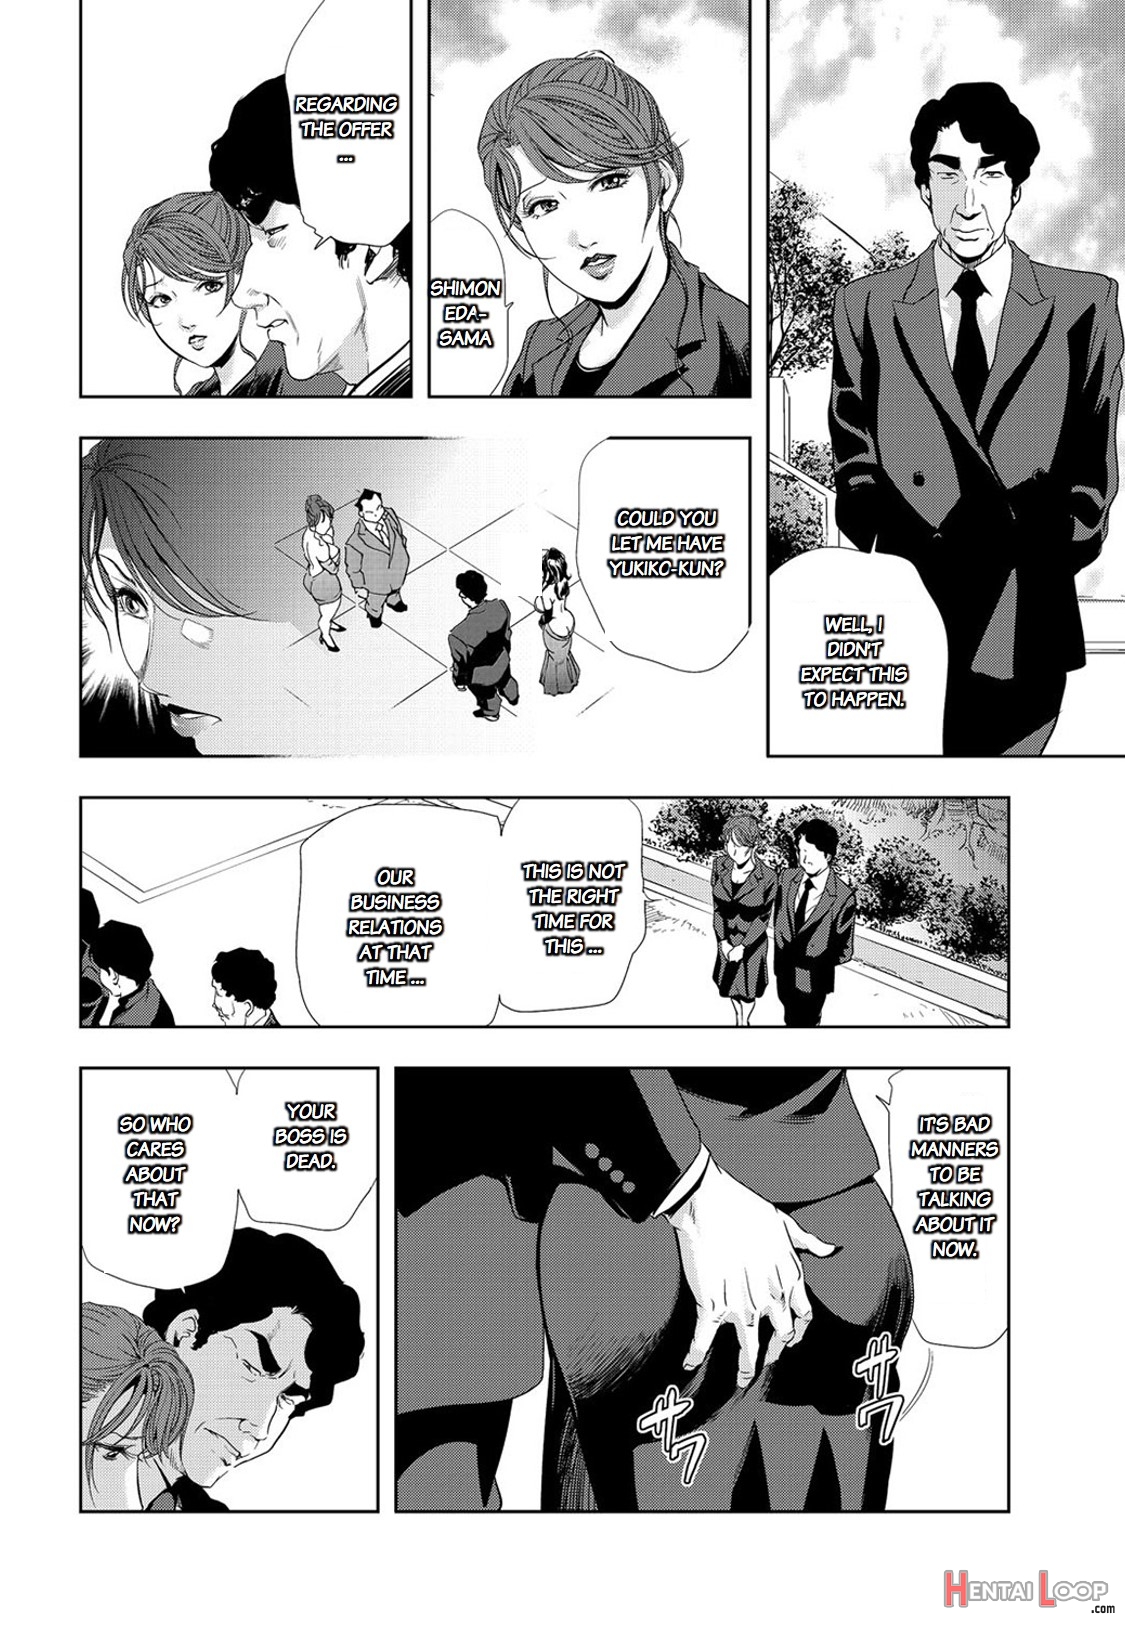 Nikuhisyo Yukiko Chapter 25-2 page 6